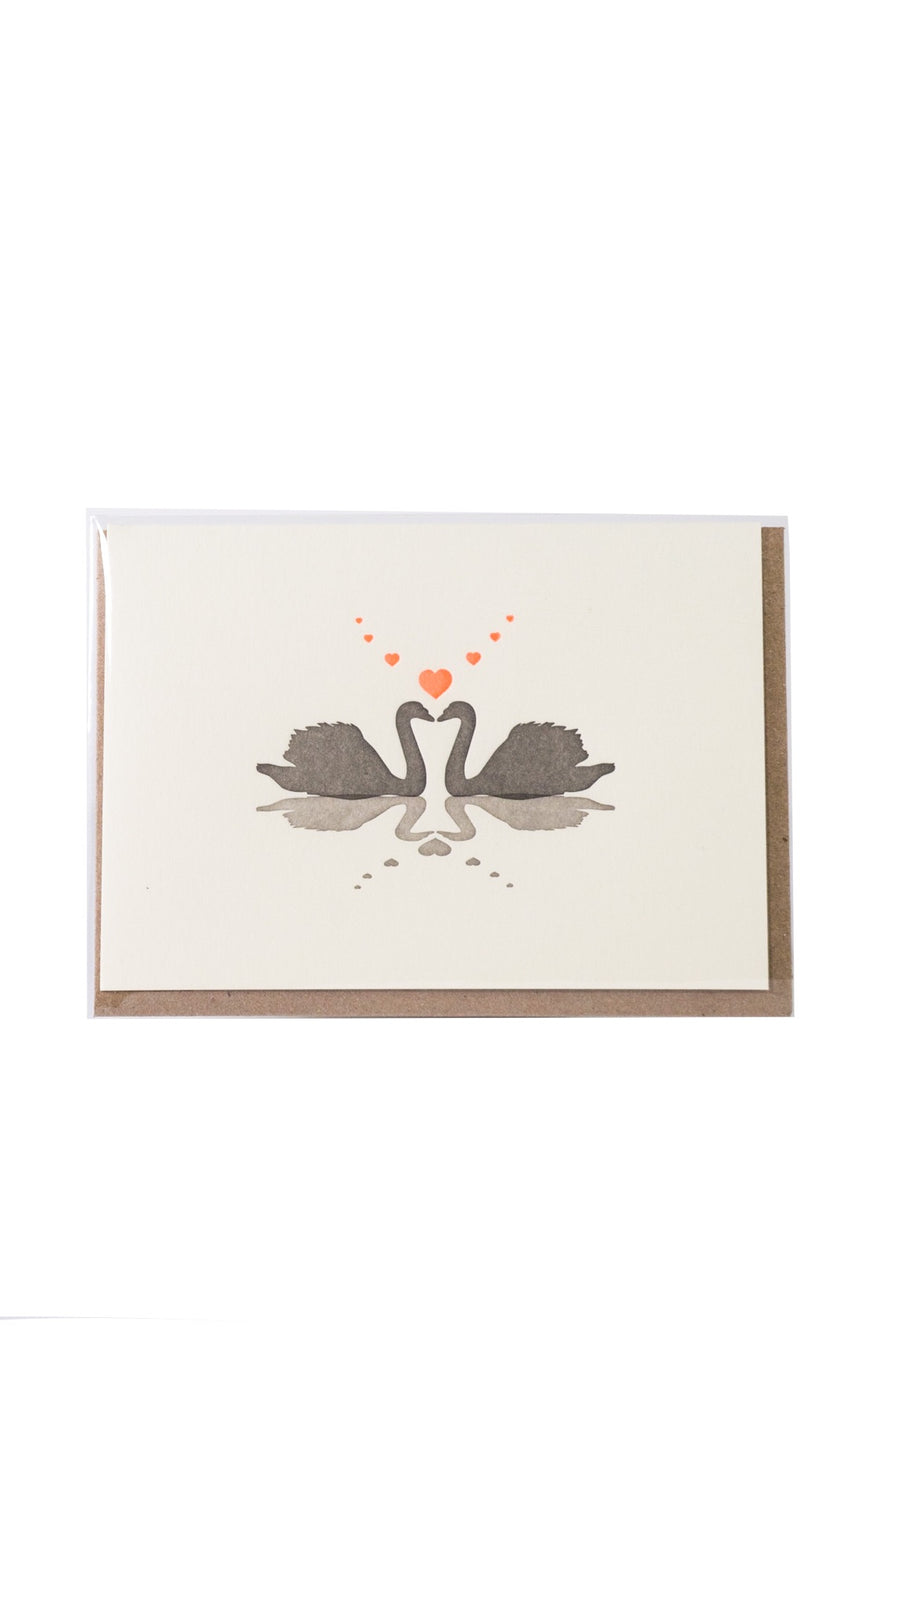 Swans in Love Card by Lark Press